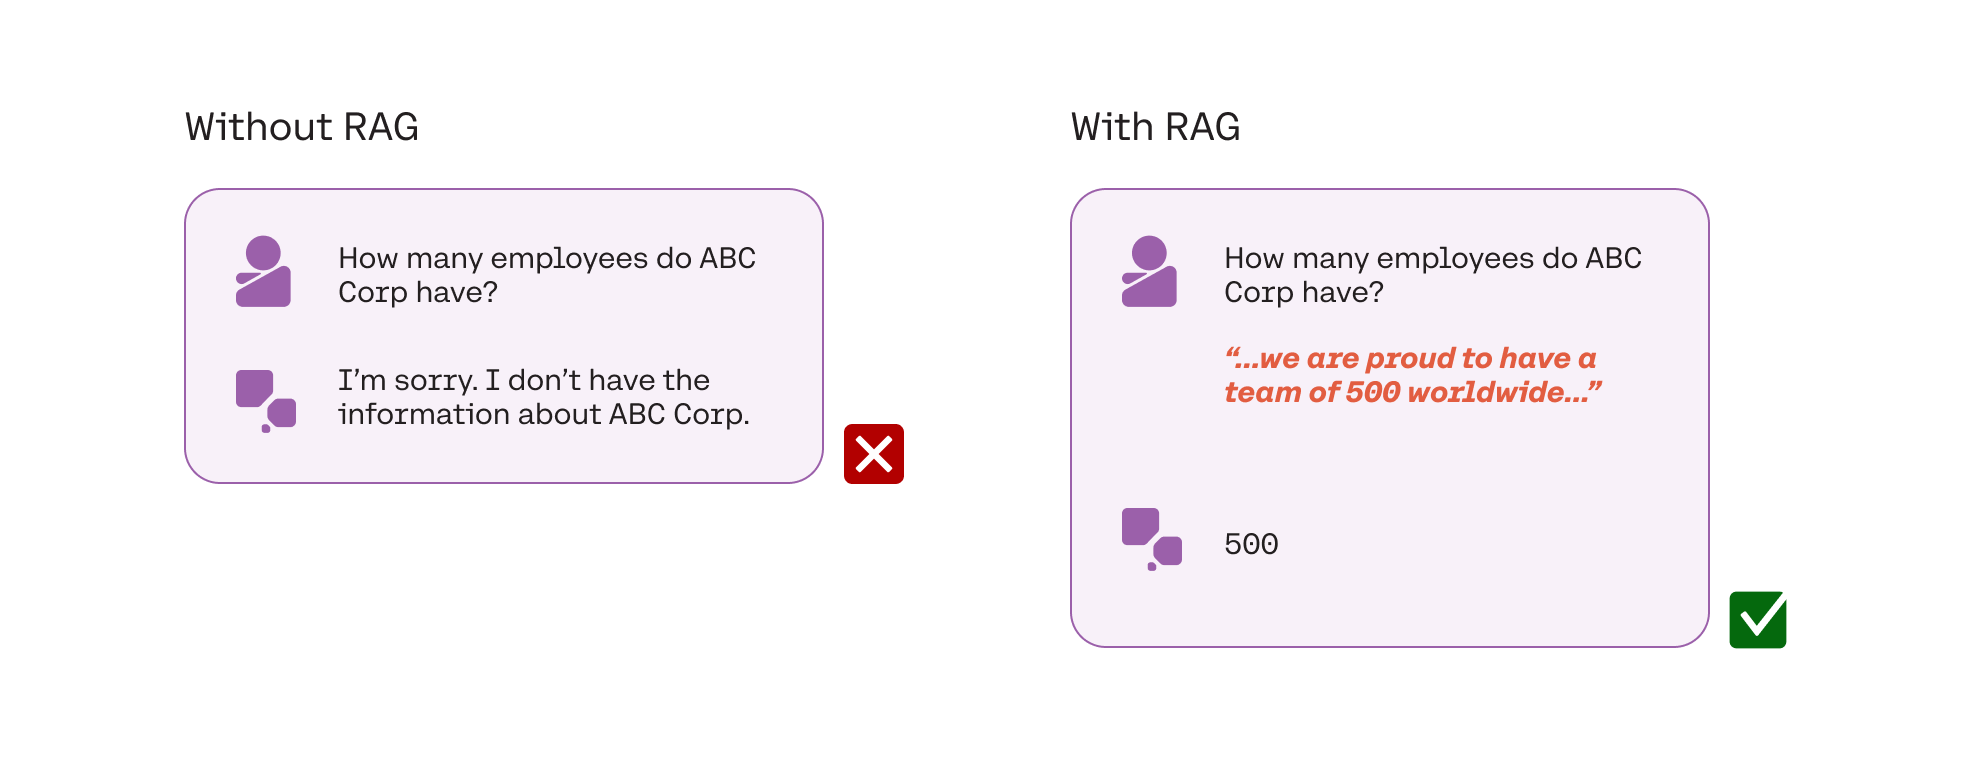 RAG solves the lack of recency problem